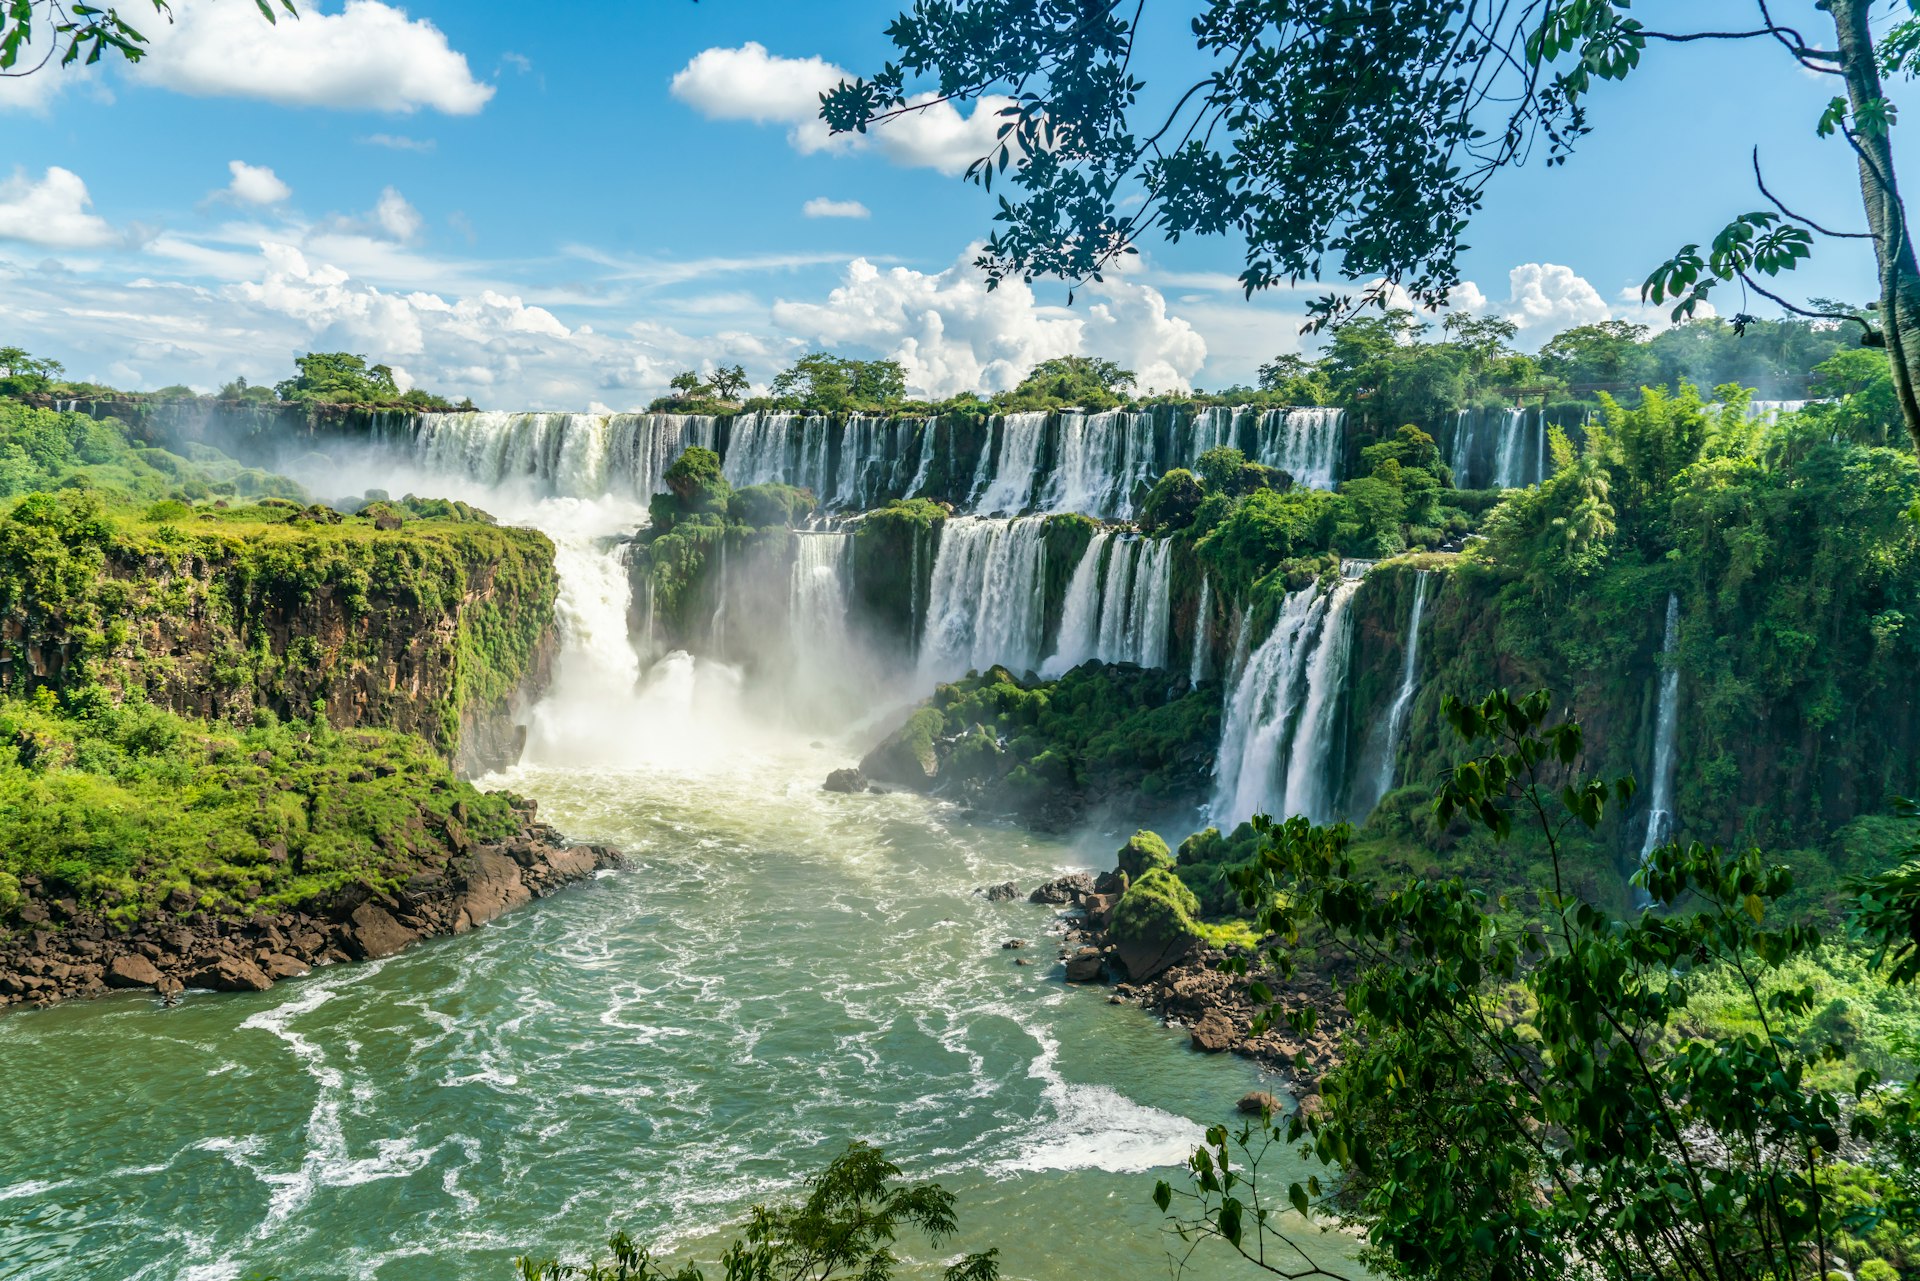 A wide view of the stunning Iguazu Falls in Brazil